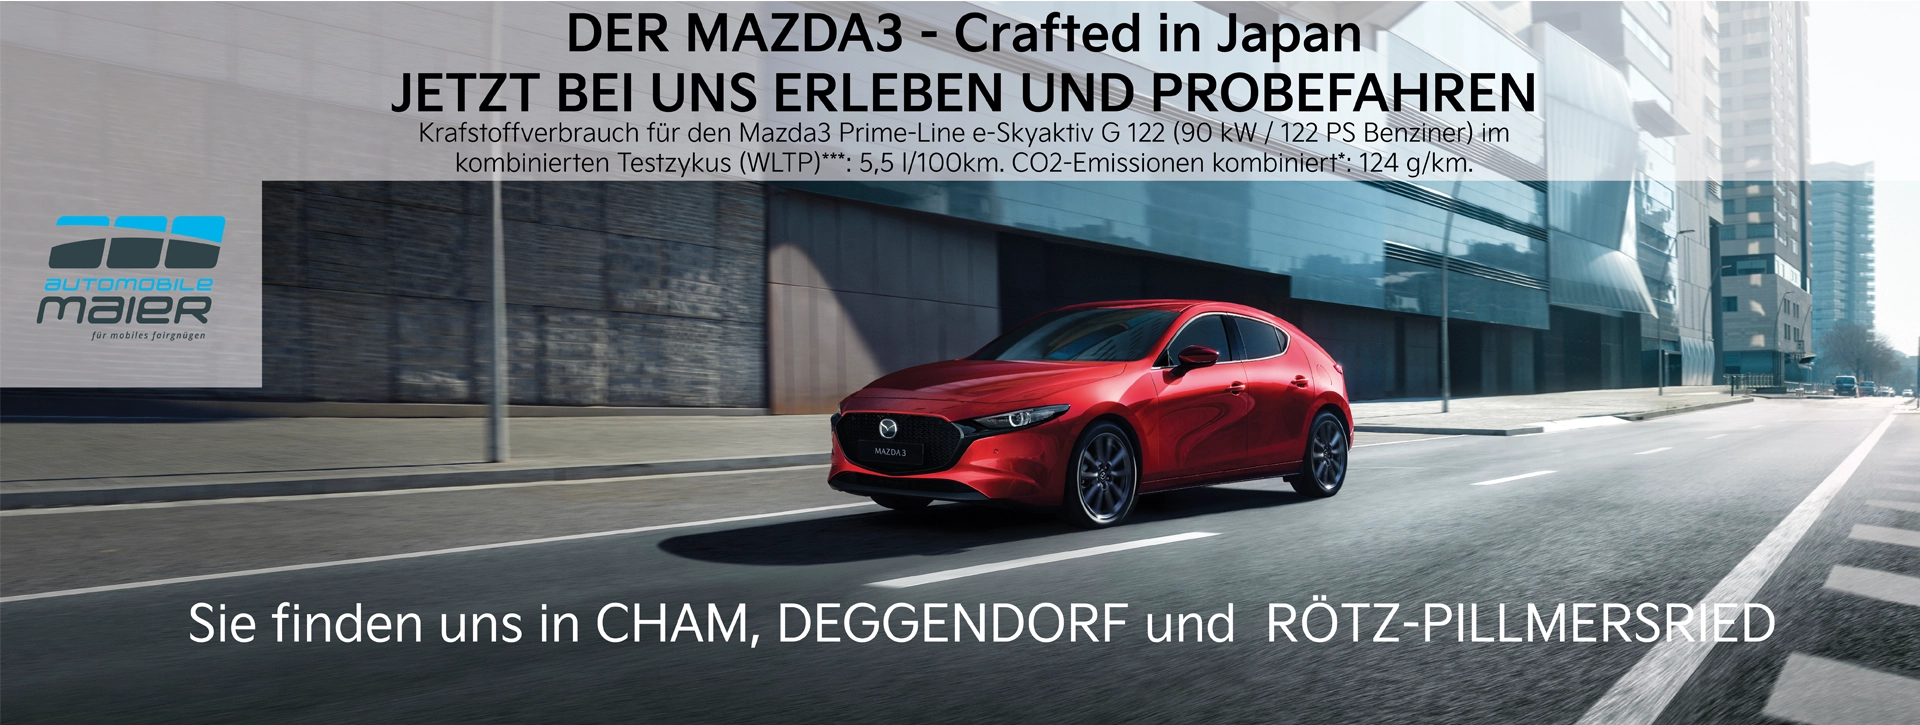 Der Mazda 3 - Crafted in Japan